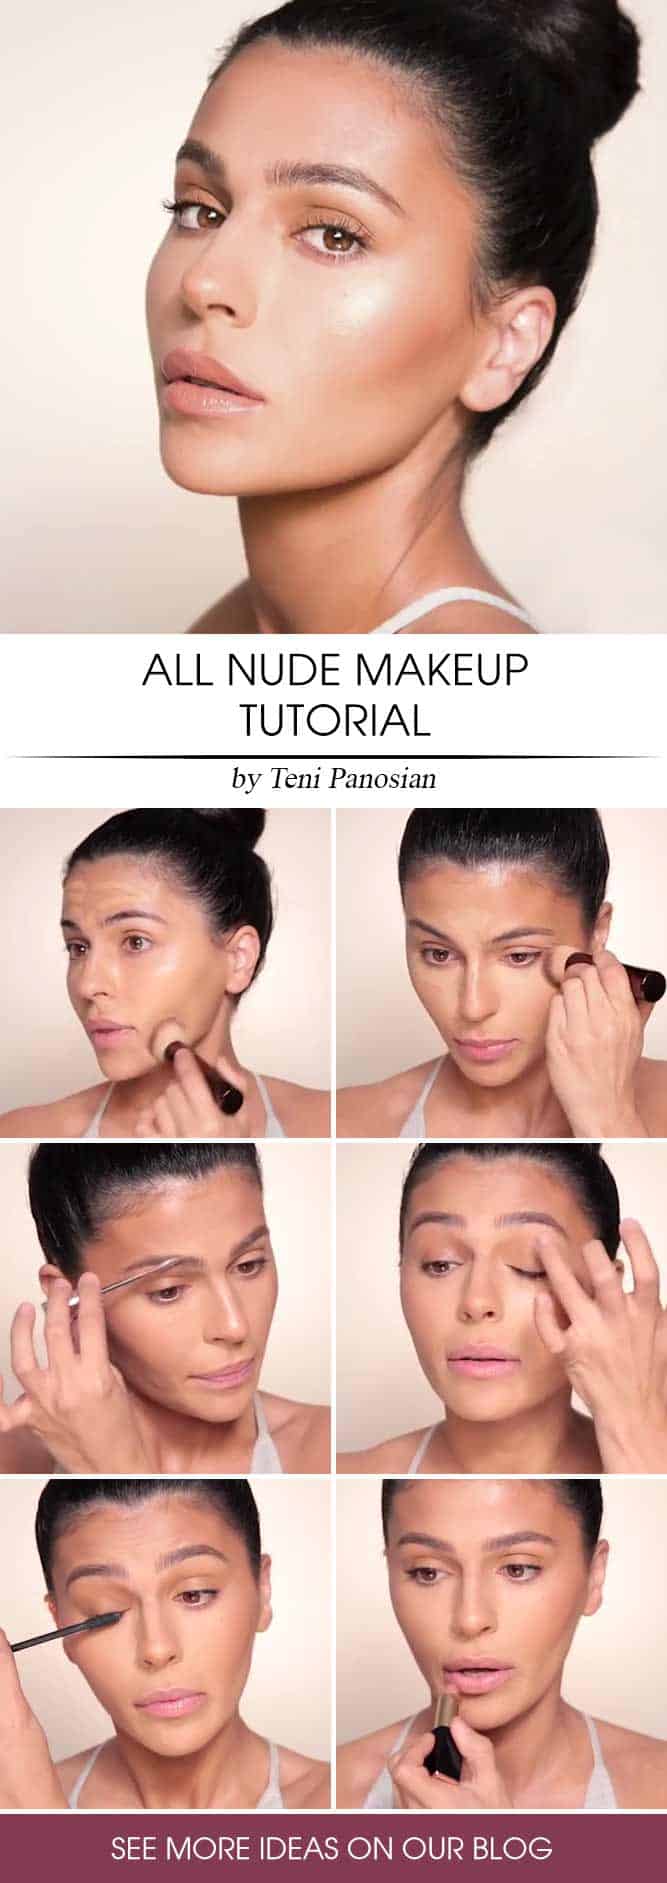 All nude makeup tutorial by Teni Panosian